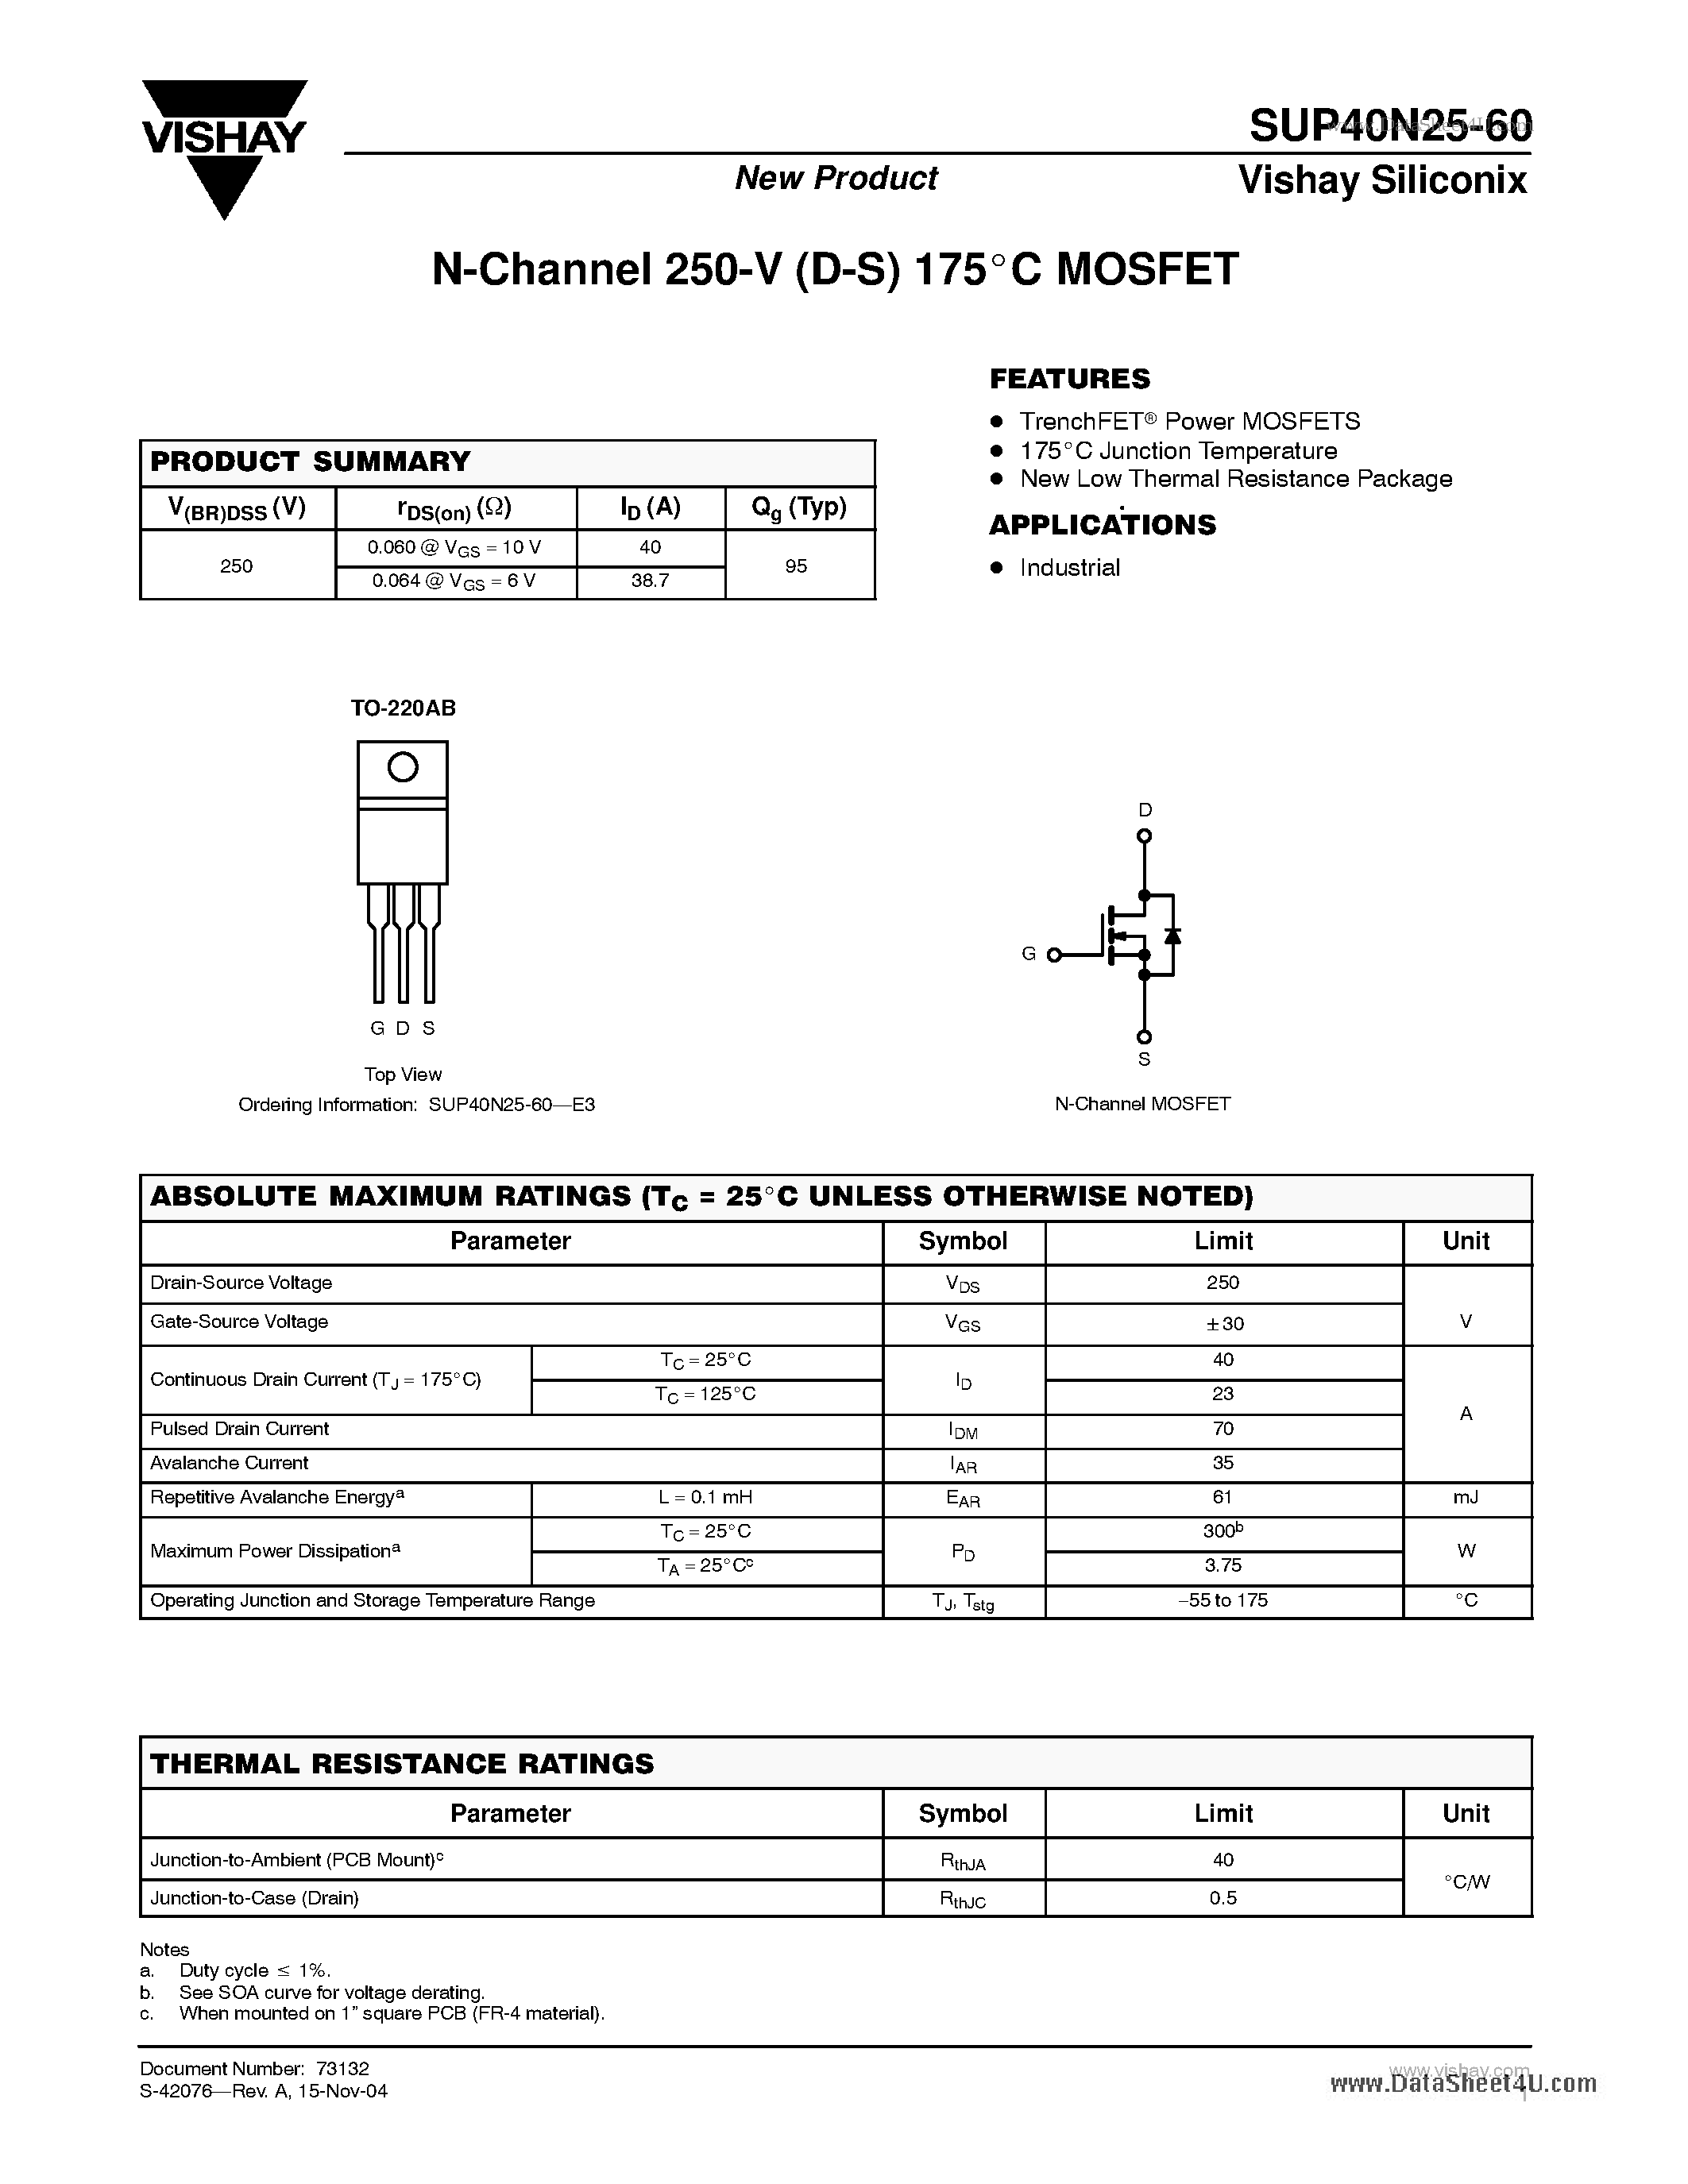 Datasheet SUP40N25-60 - N-Channel 250-V (D-S) 175C MOSFET page 1